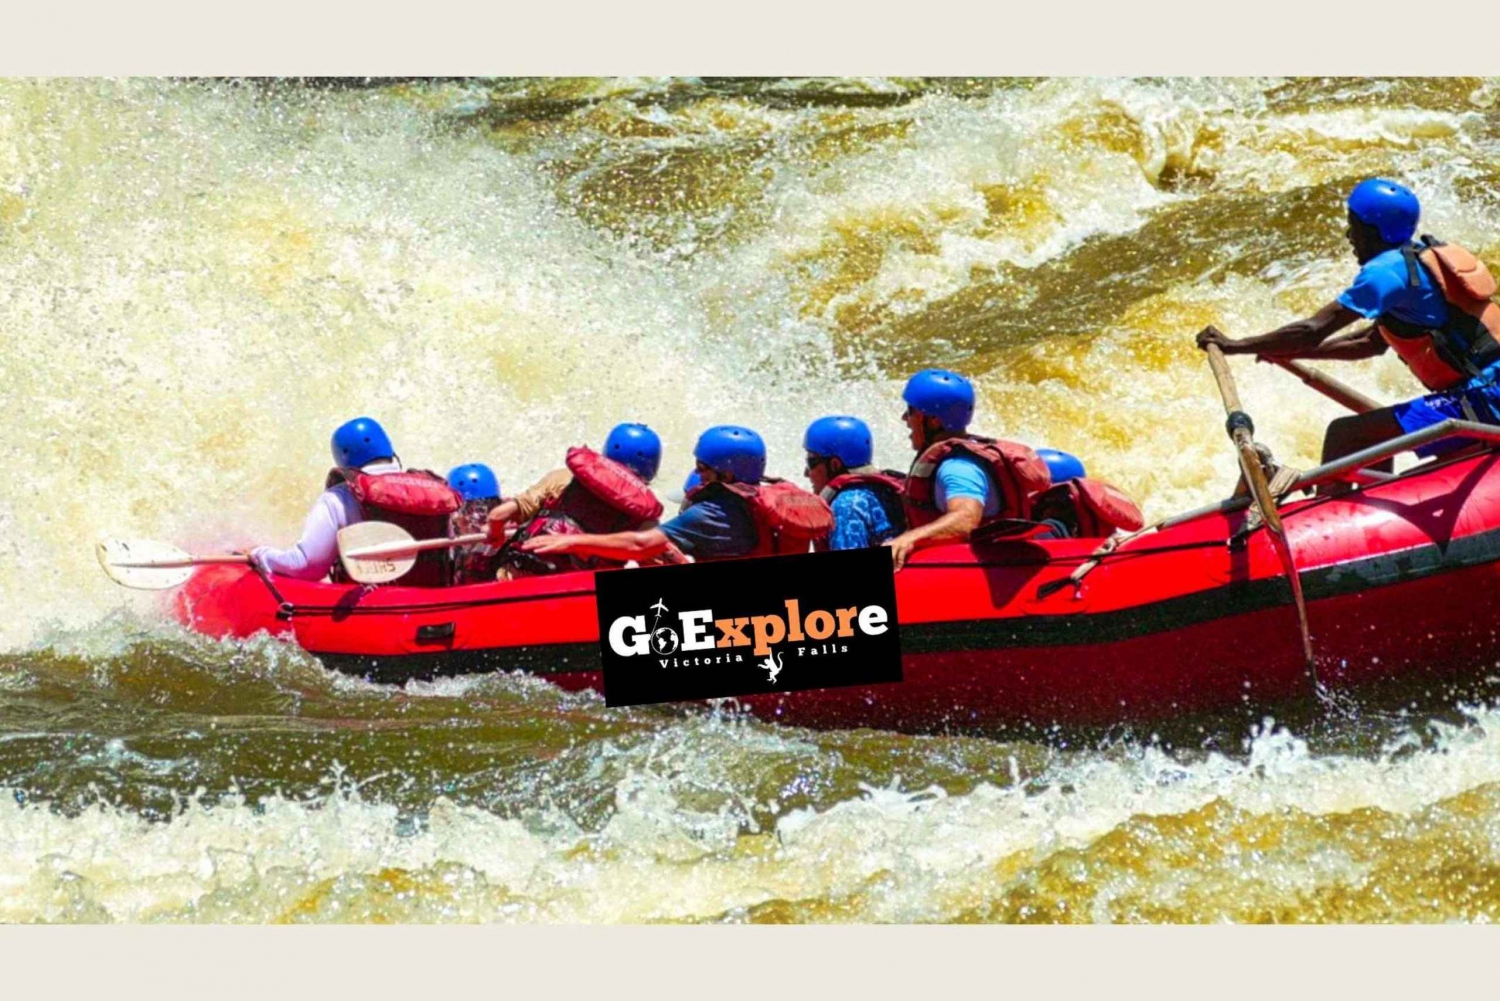 Victoria Falls: Zambezi National Park Game Drive